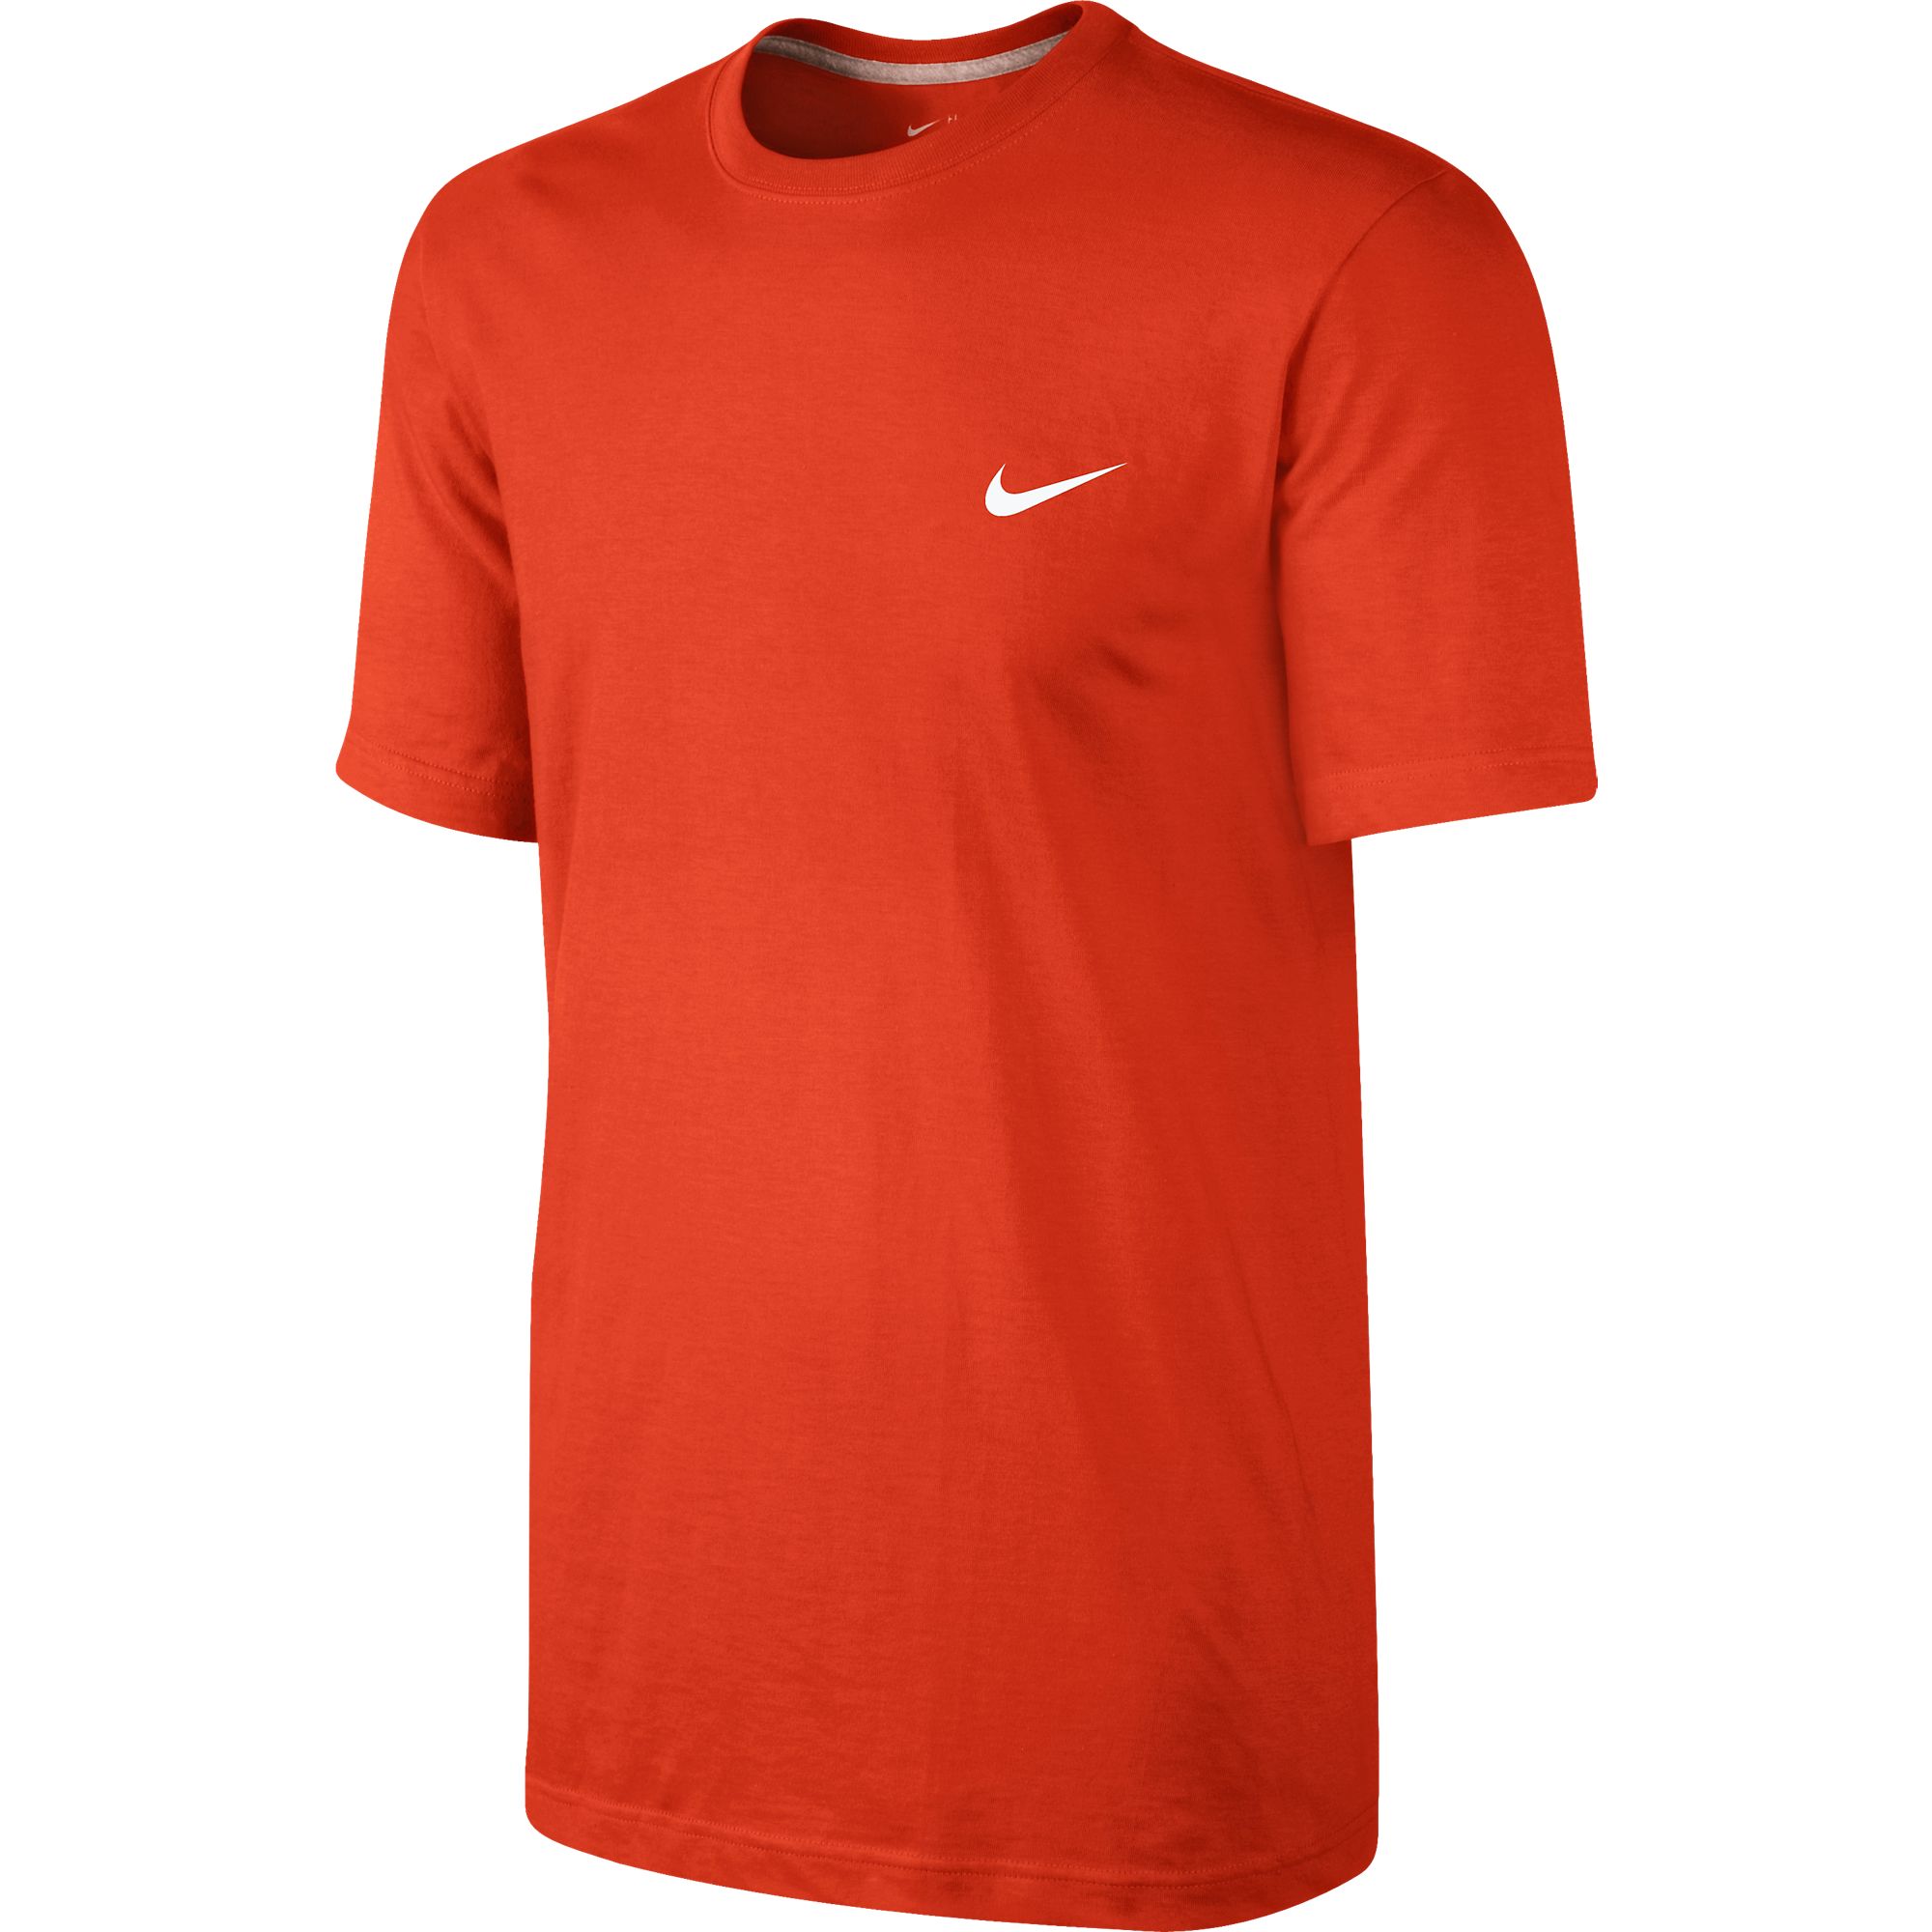 Nike Embroidered Swoosh Men's T-Shirt Athletic Orange/White 707350-891 ...